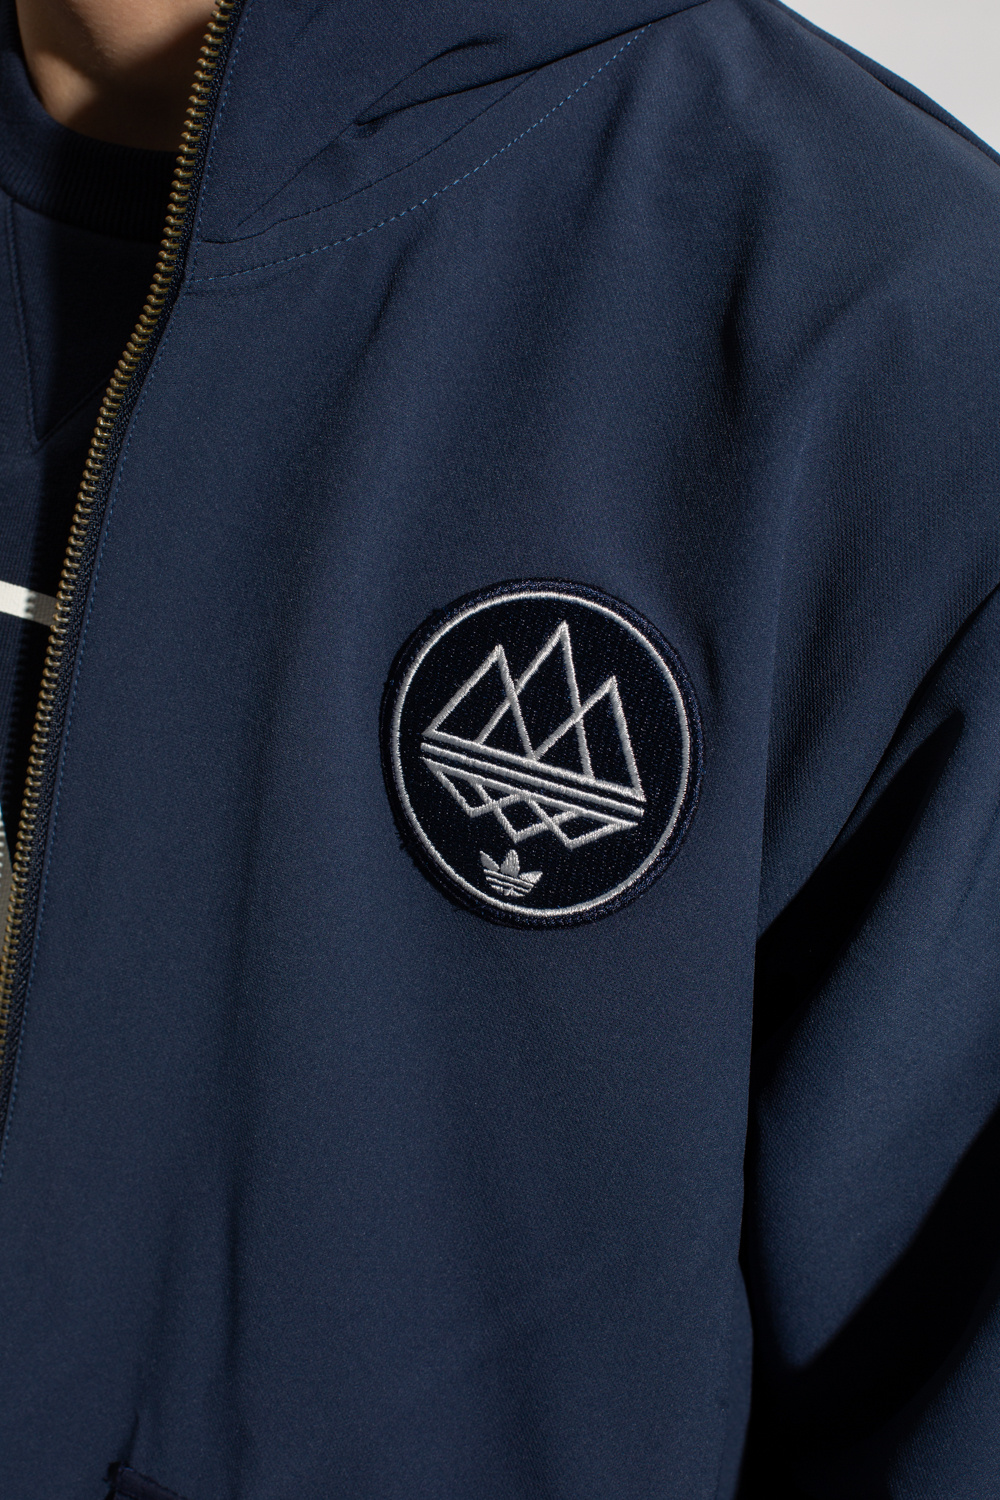 Alpinista Milagroso Guiño ADIDAS Originals Jacket with logo | Men's Clothing | Vitkac